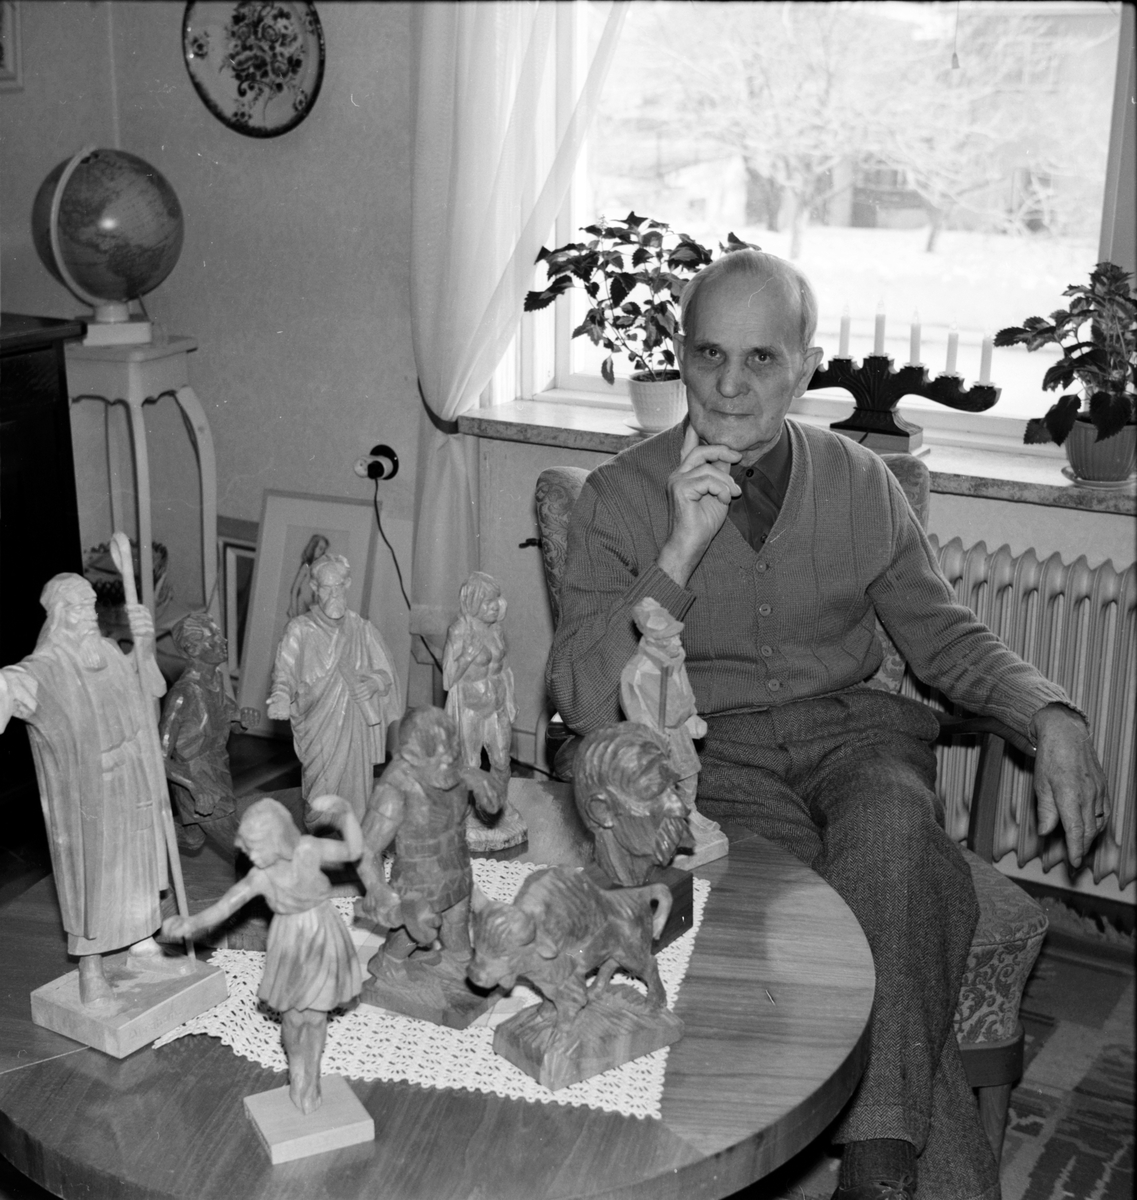 Arbrå,
Julius Forsman,
2 December 1968